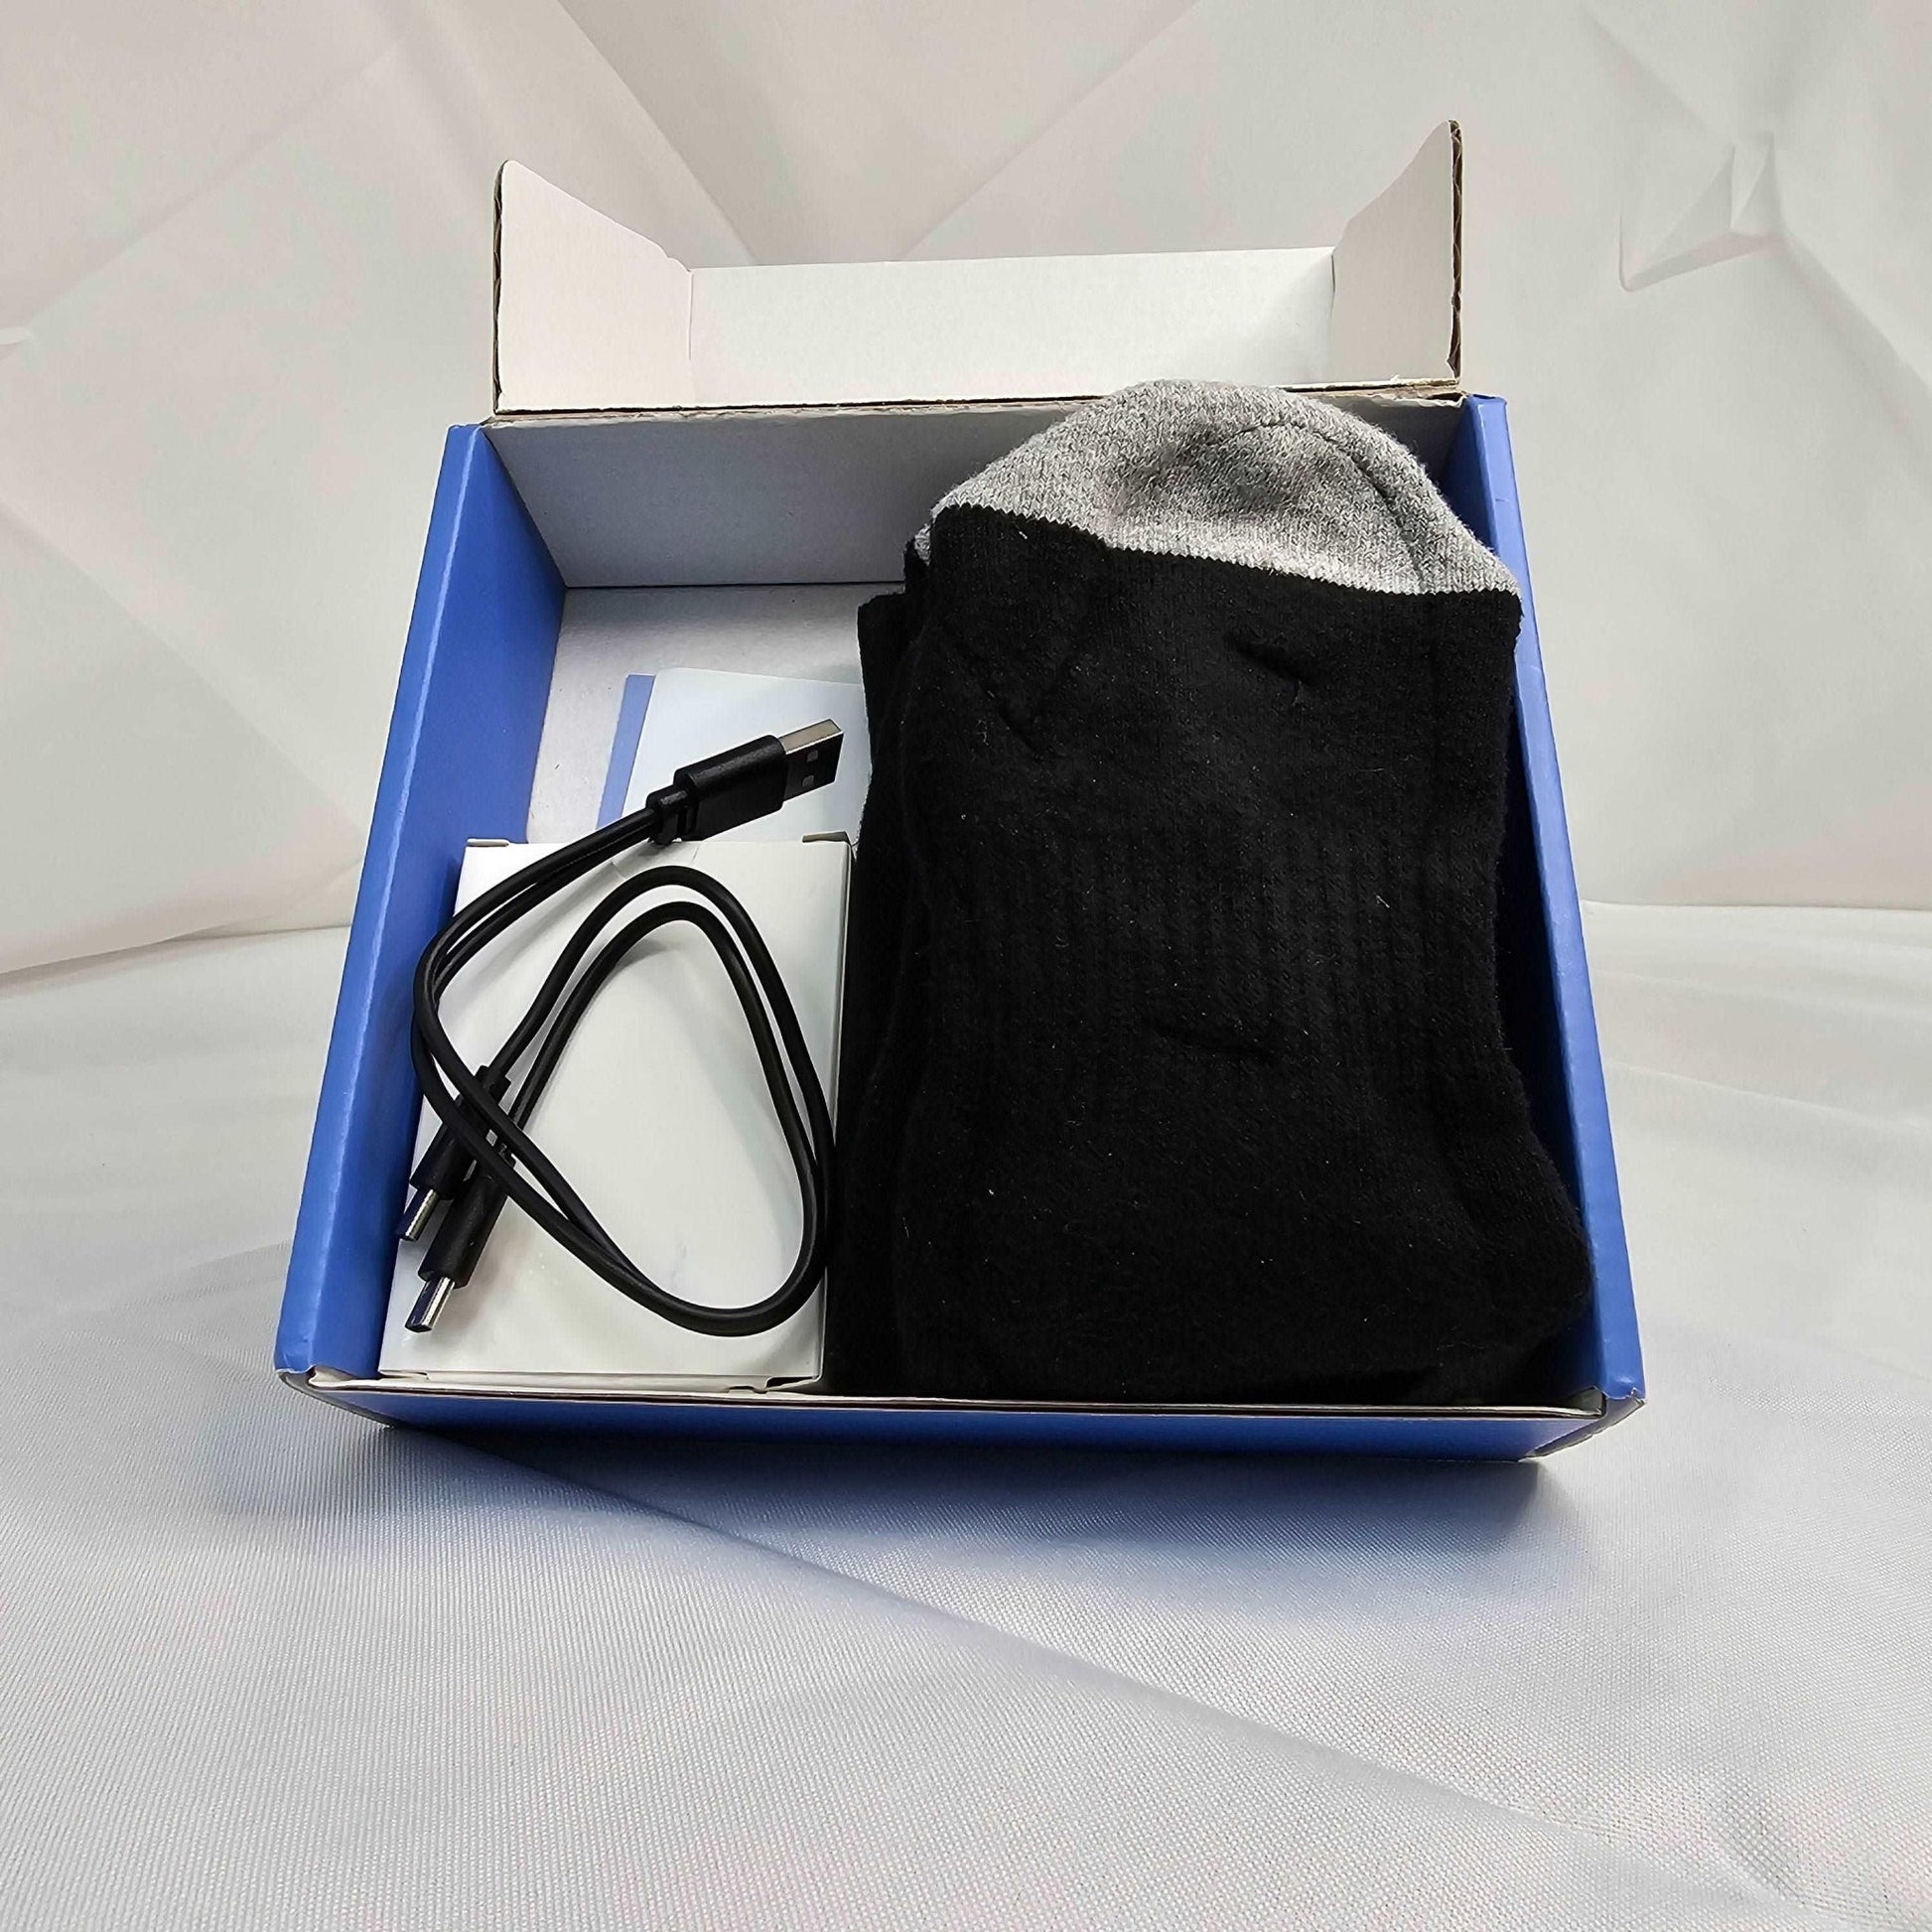 Heating Socks For Winter Unisex - DQ Distribution